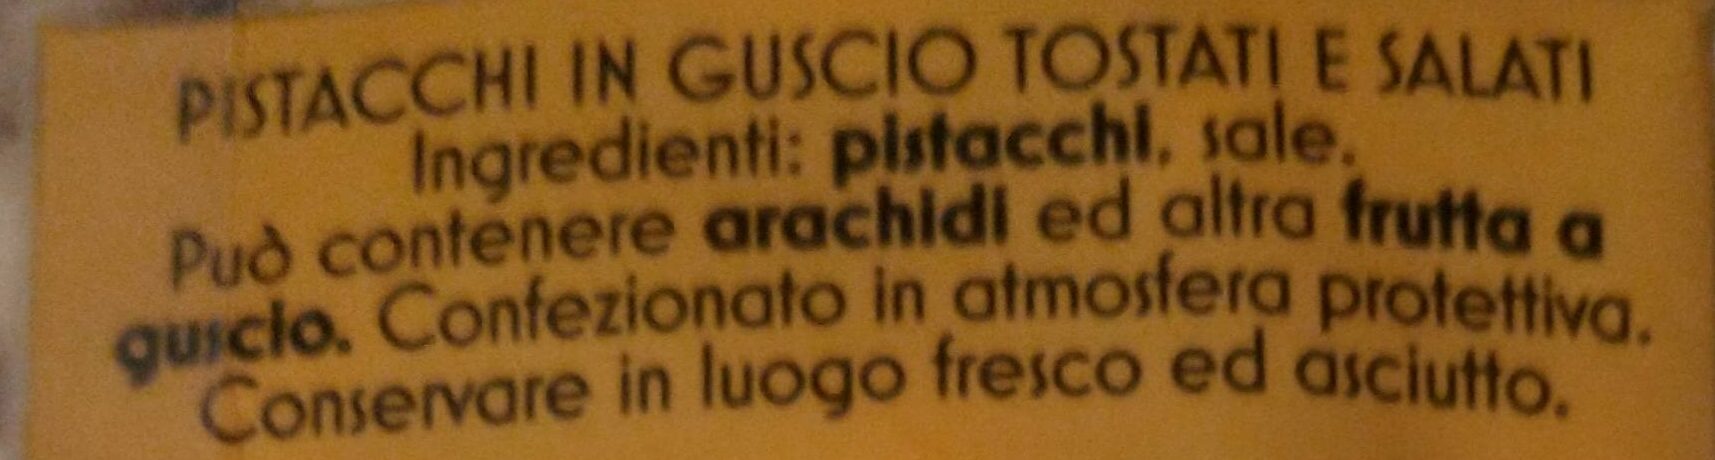 Pistacchi tostati salati - Ingrediënten - it